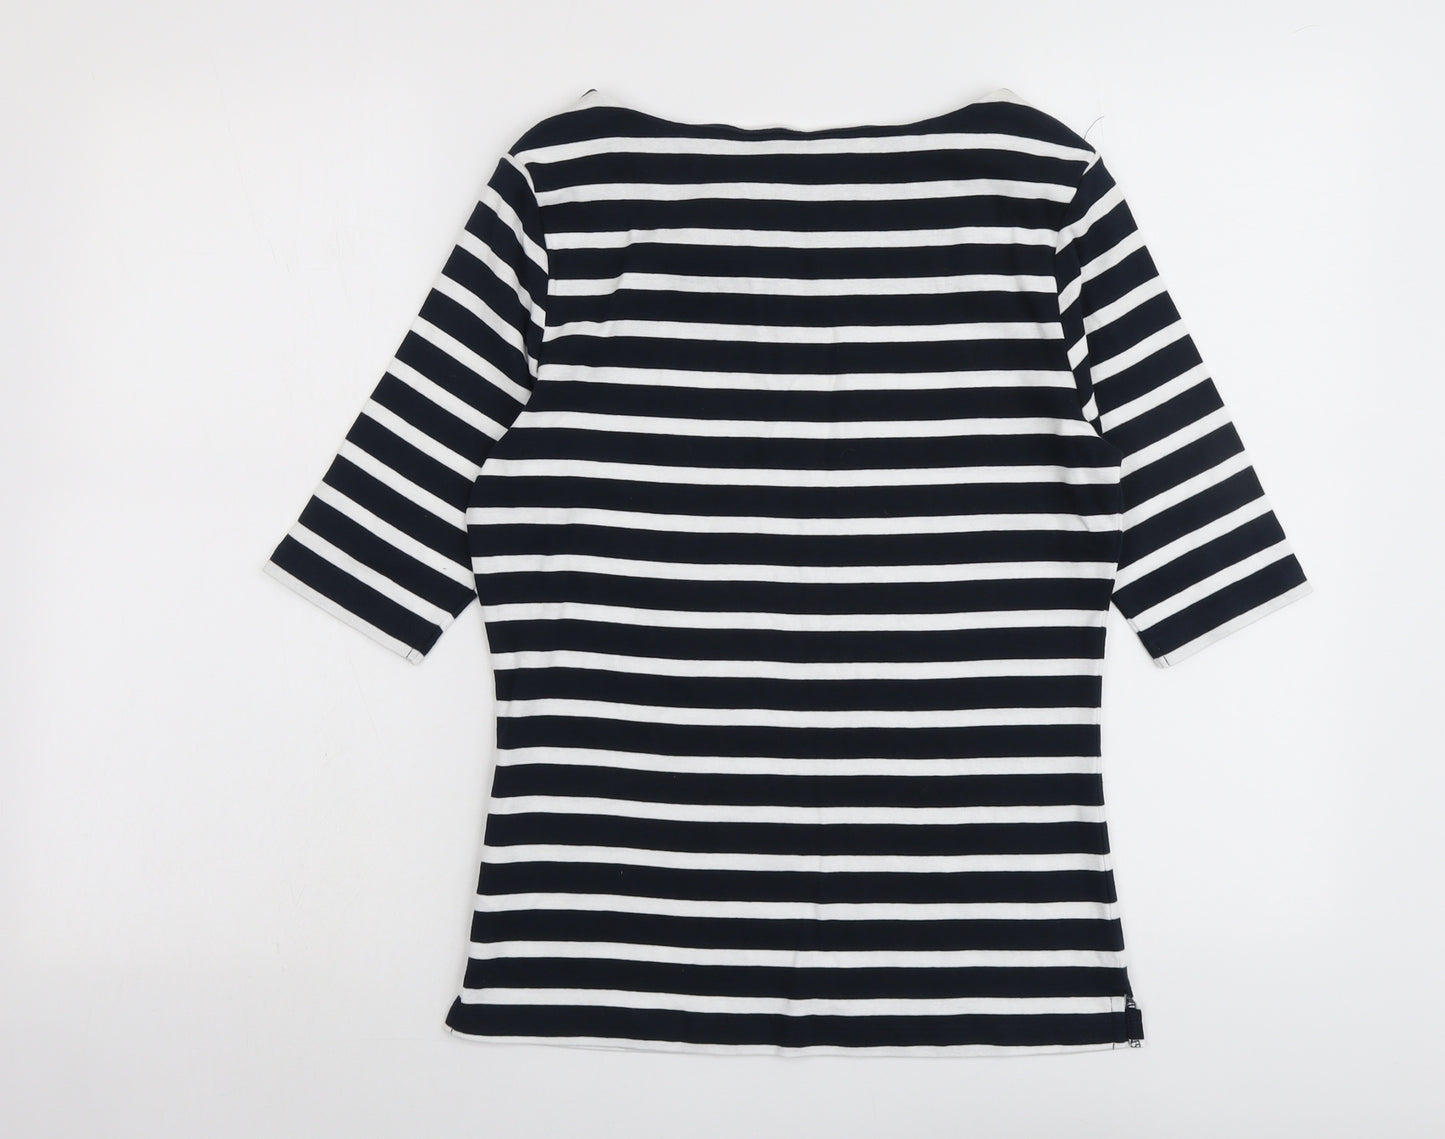 John Lewis Womens Blue Striped Cotton Basic T-Shirt Size 12 Round Neck